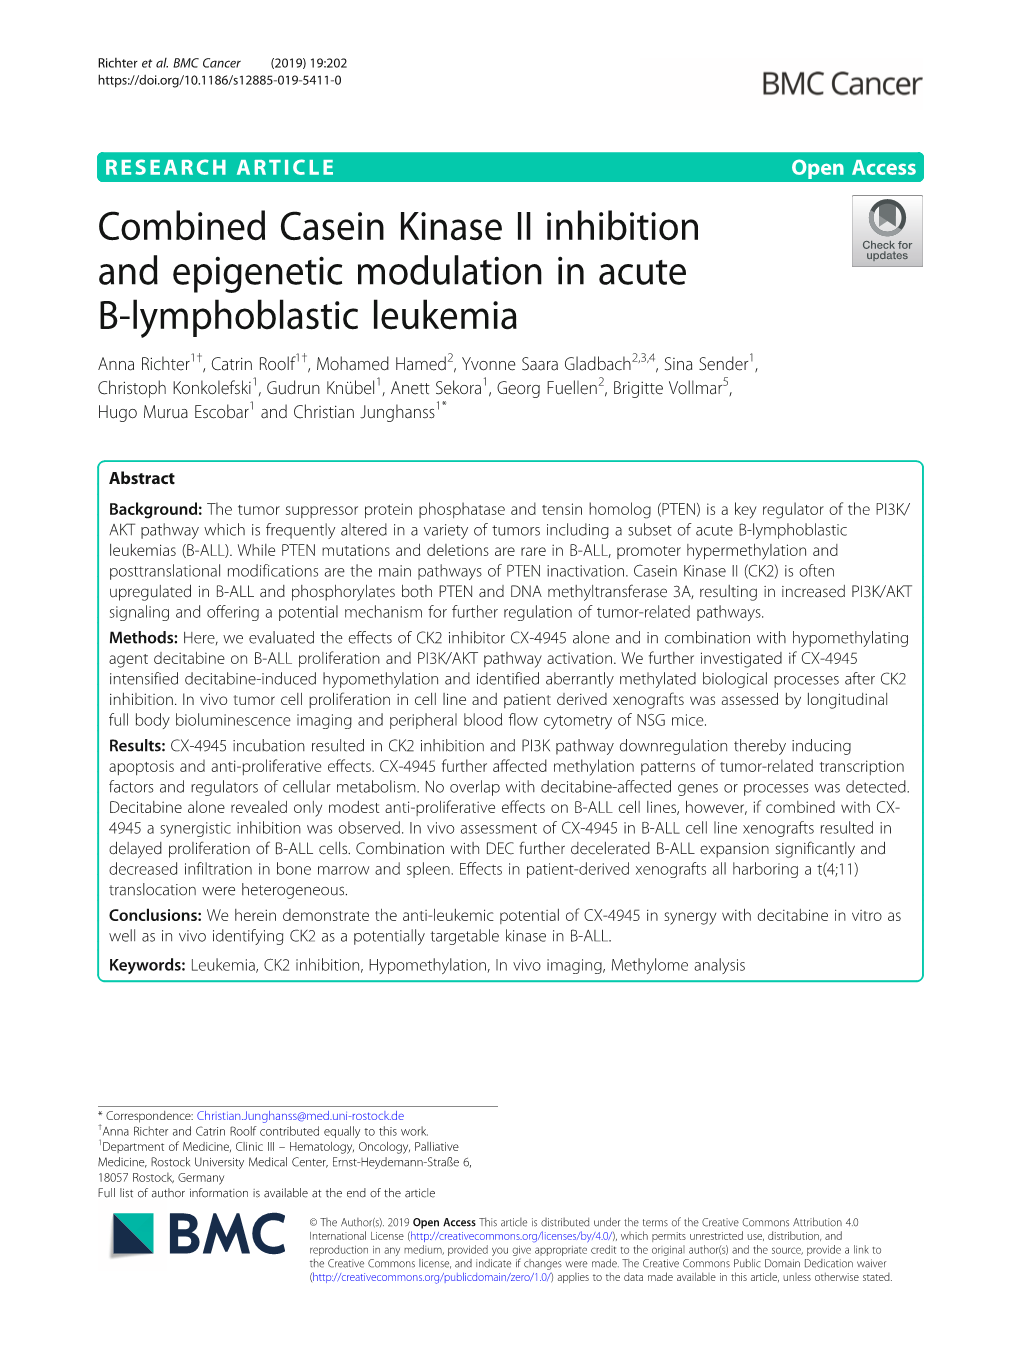 Combined Casein Kinase II Inhibition and Epigenetic Modulation in Acute